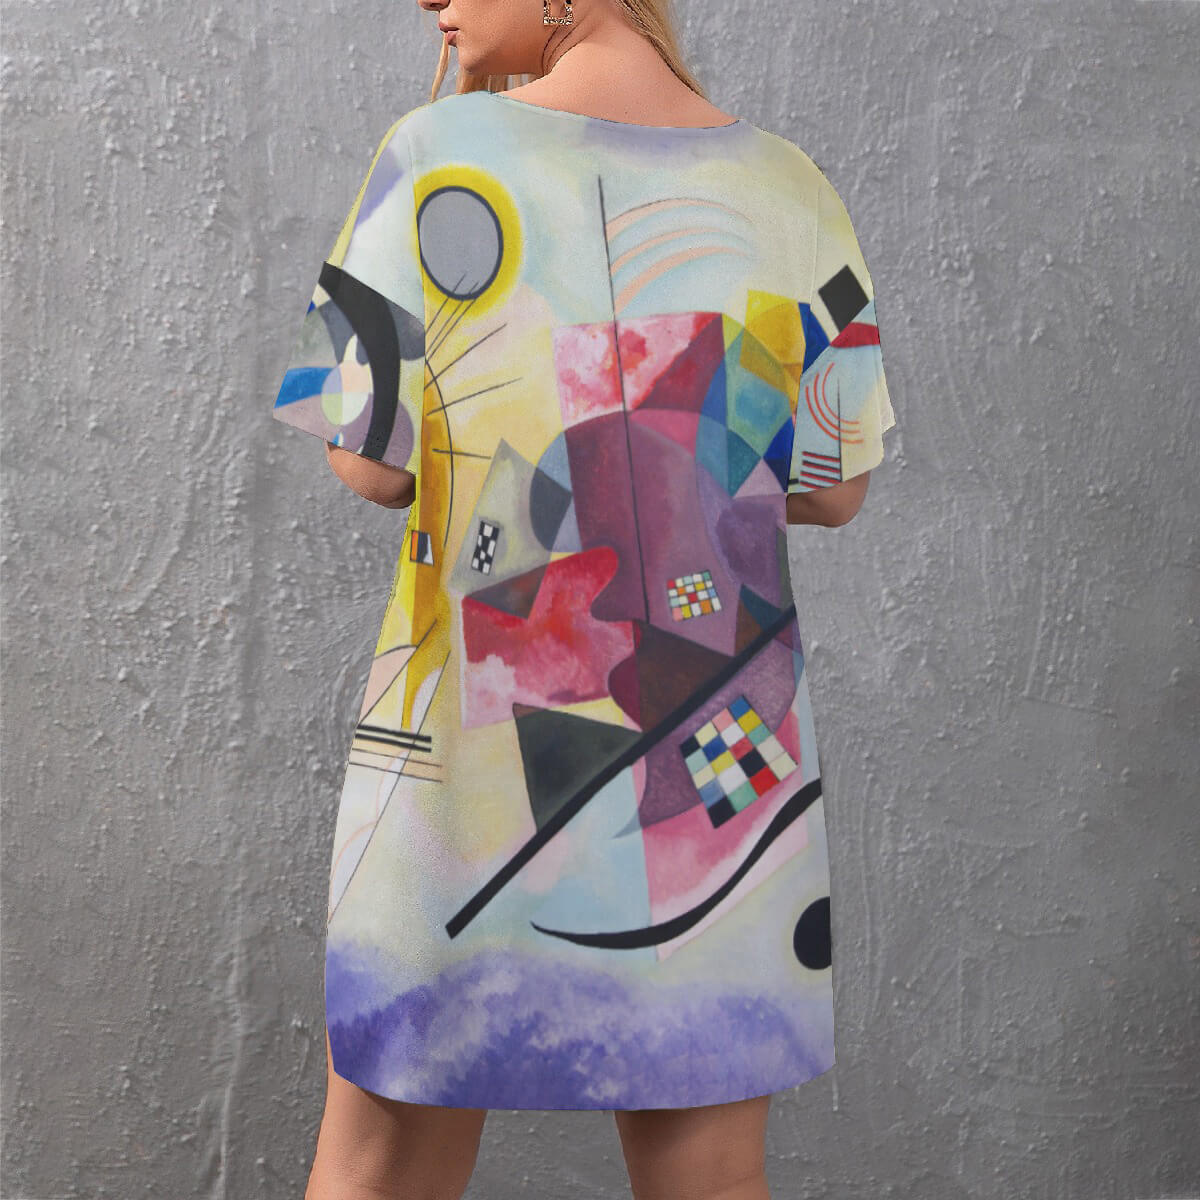 Plus-Size Fashion Ensemble Inspired by Kandinsky